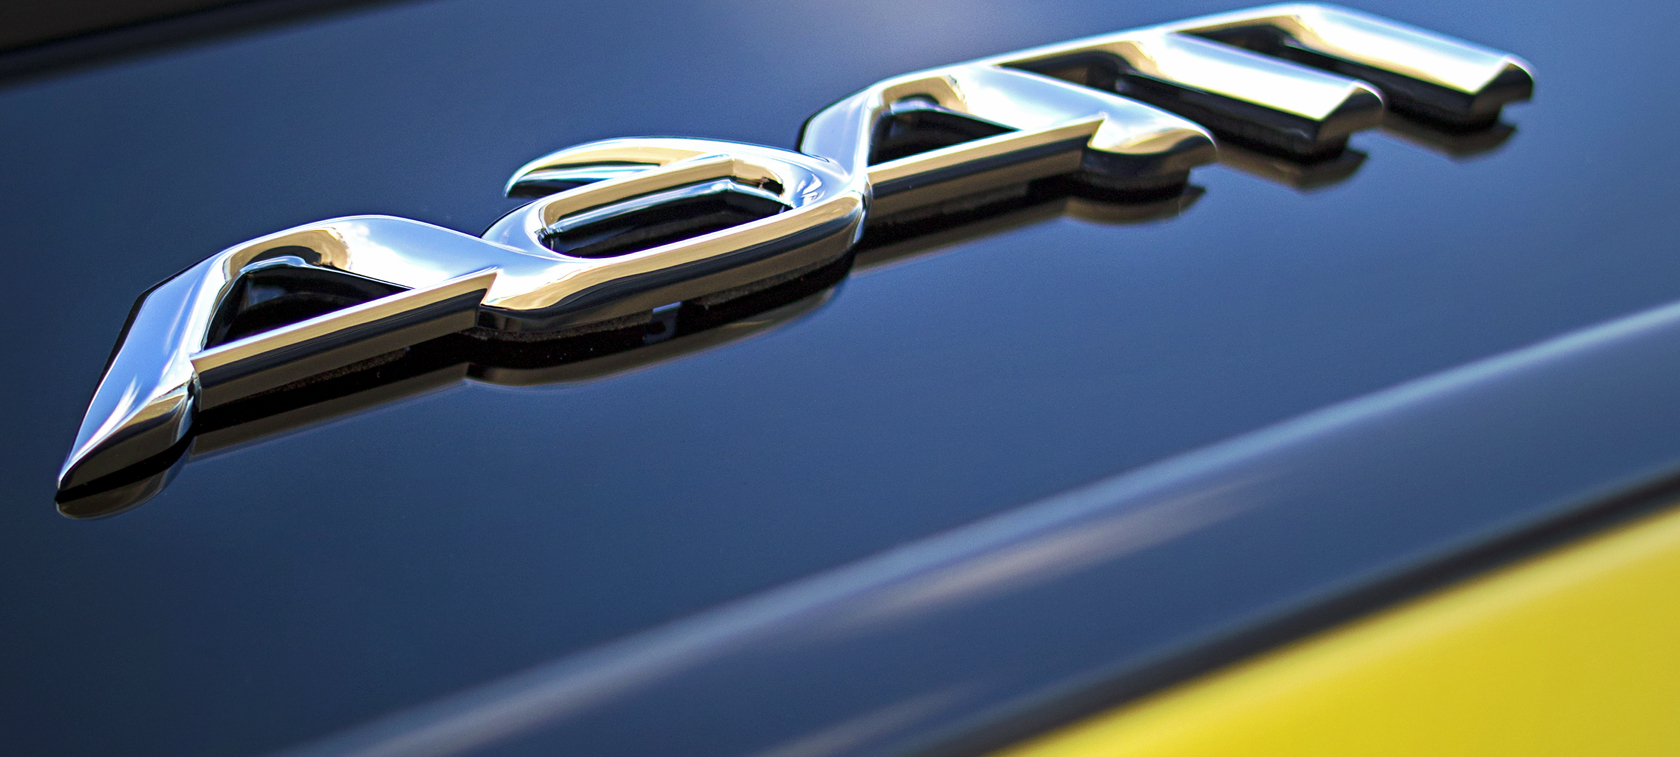 Opel Adam LPG - saving in style